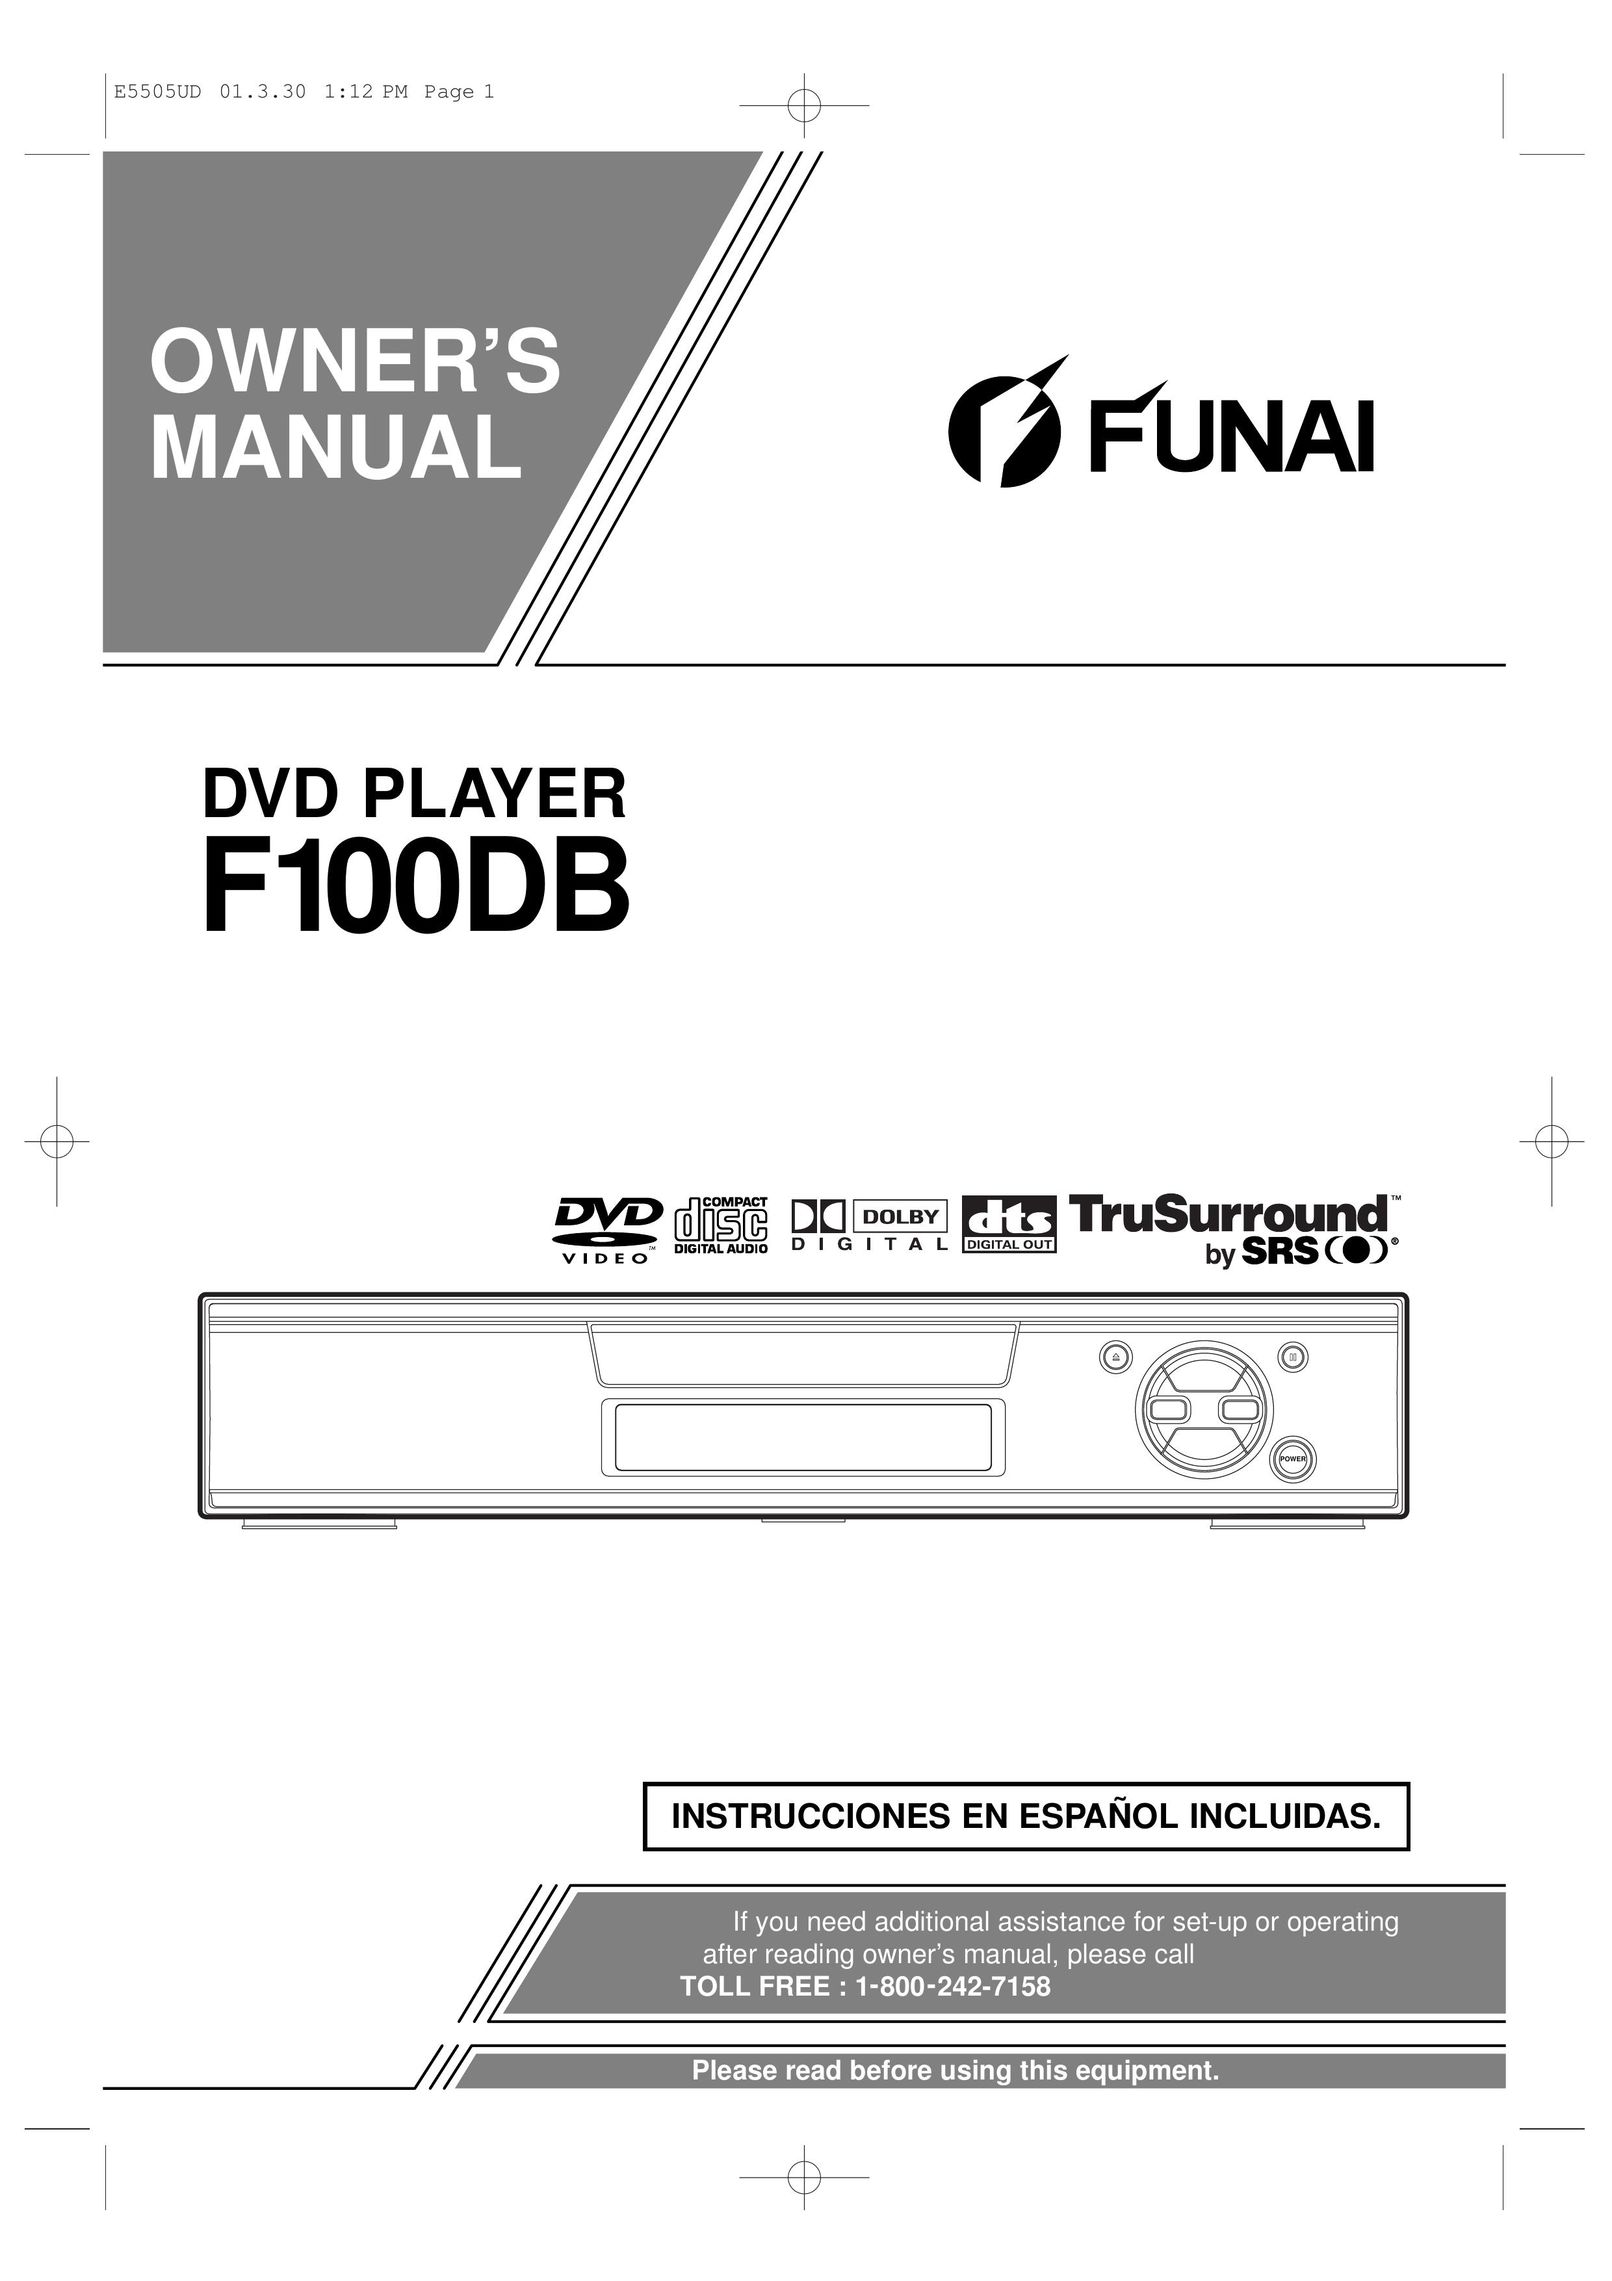 FUNAI F100DB DVD Player User Manual